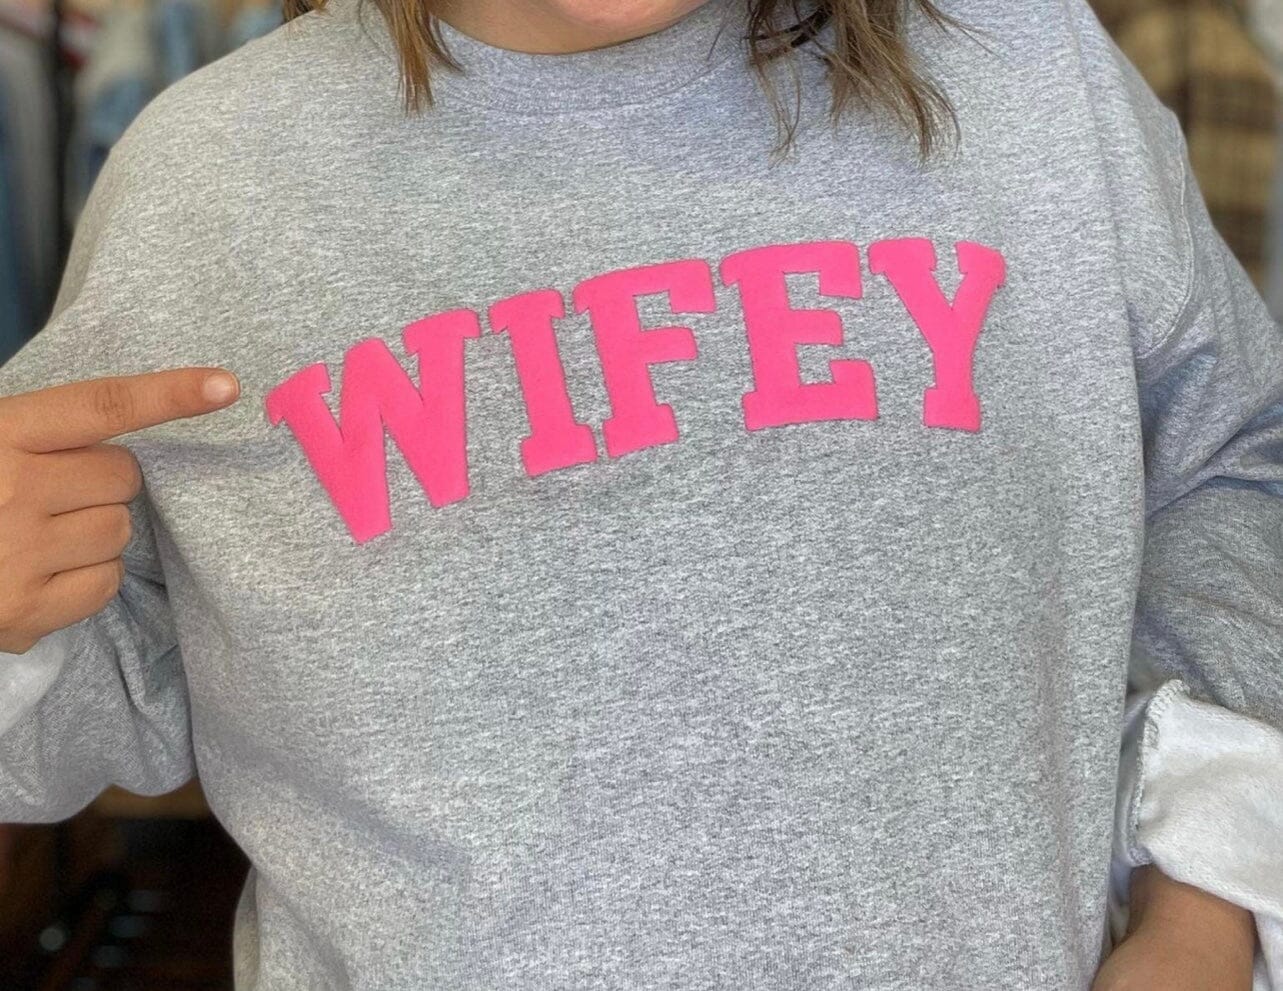 Wifey Puff Sweatshirts ask apparel wholesale 